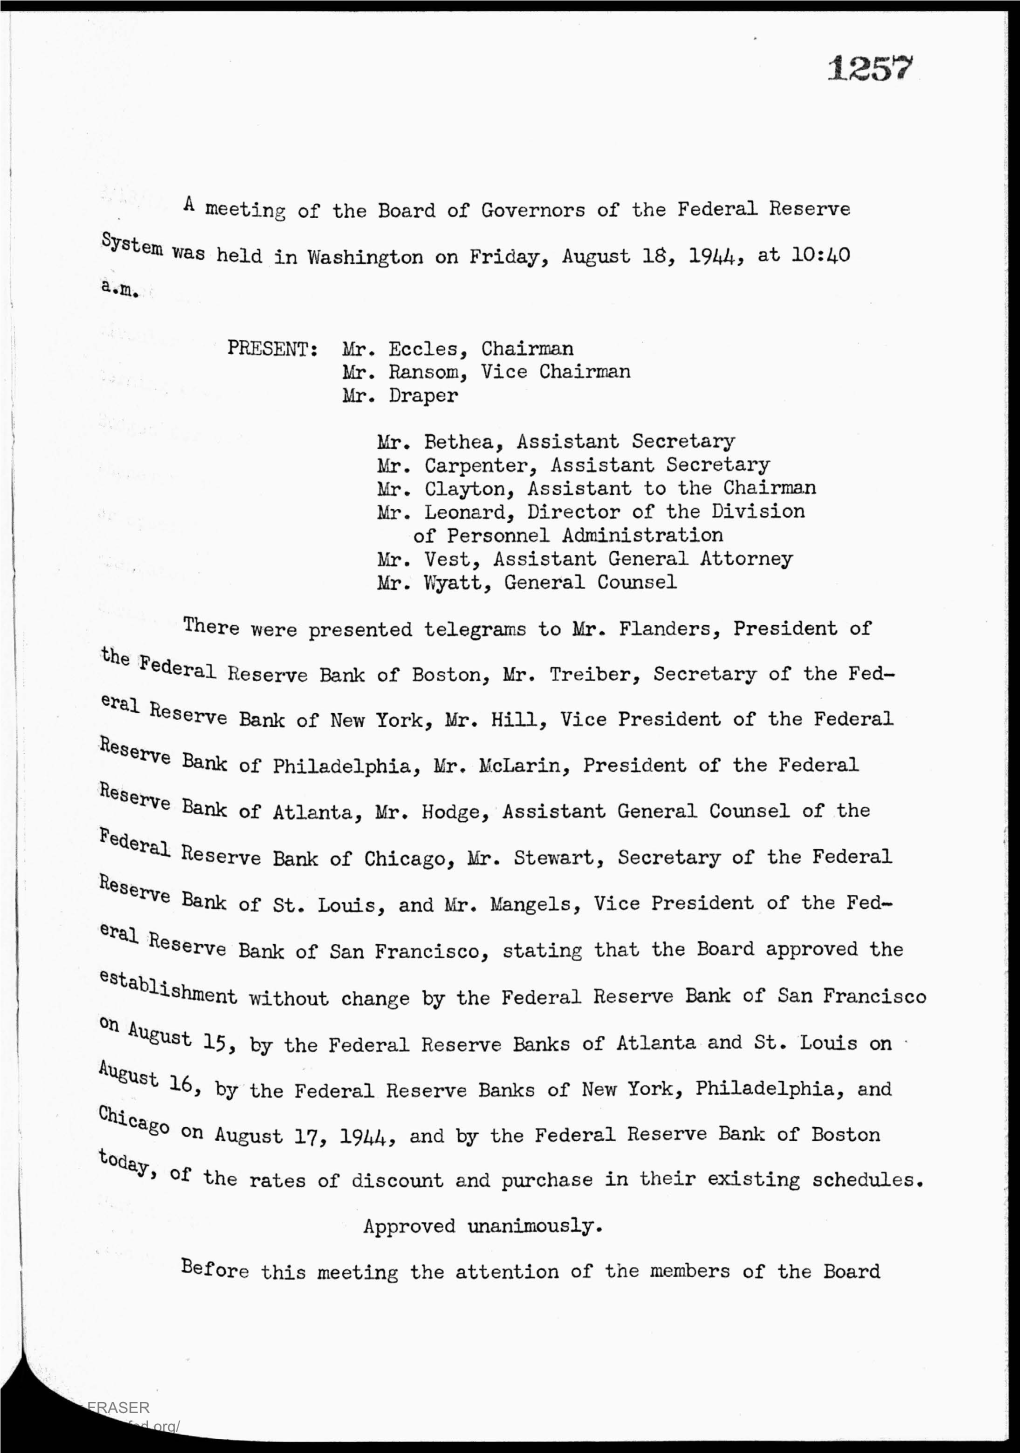 Meeting Minutes, August 18, 1944, Volume 31, Part 3